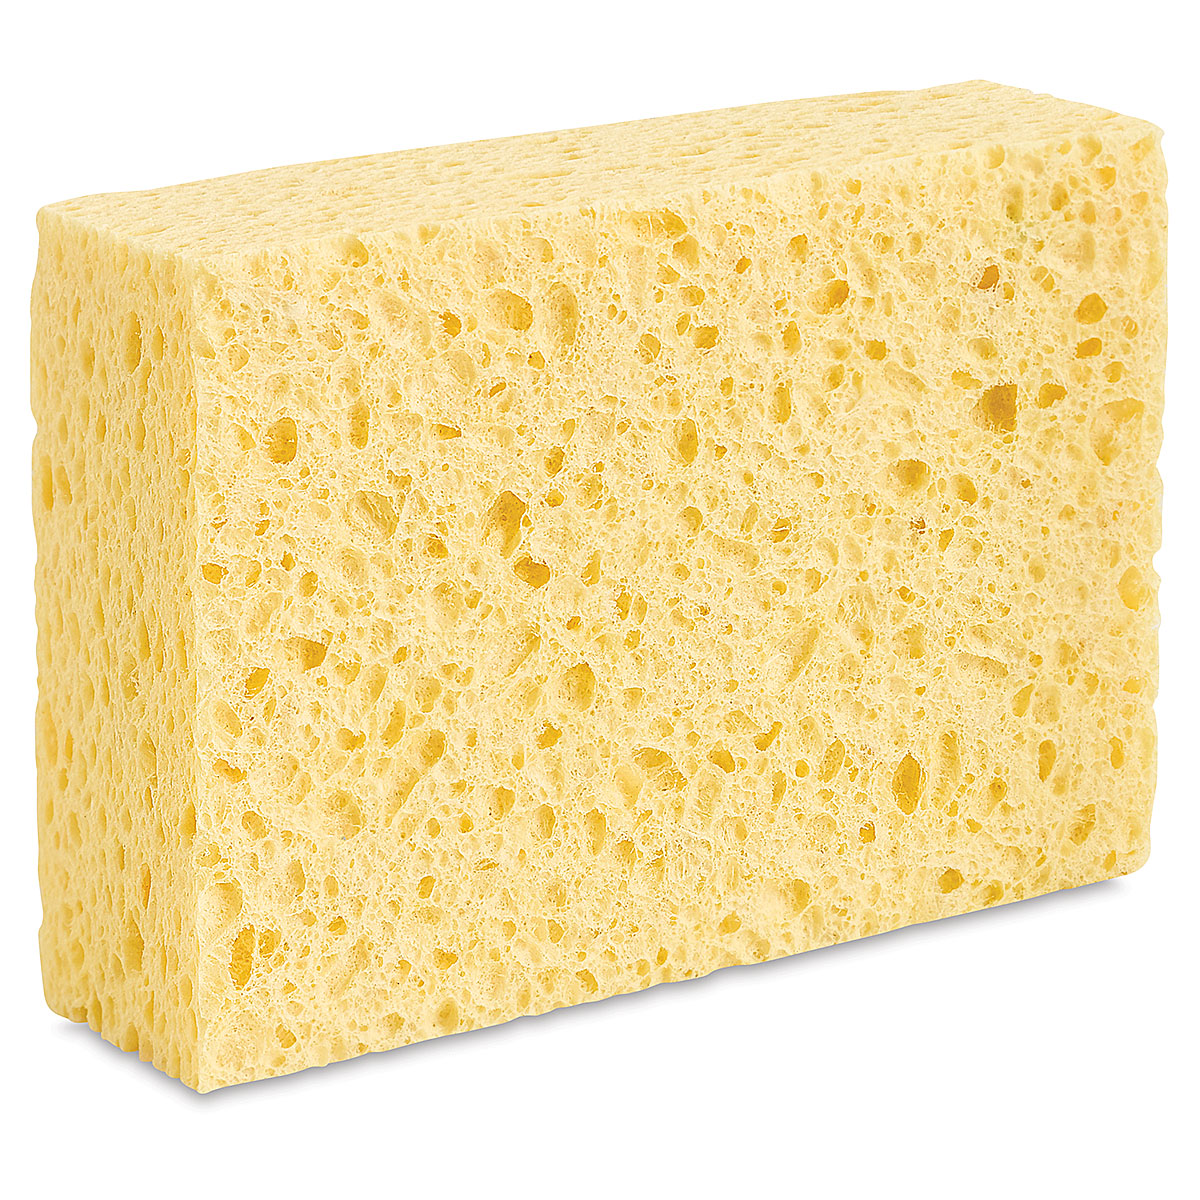 3M C31 Commercial Cellulose Sponge Yellow 4-1/4 X 6 for sale online 